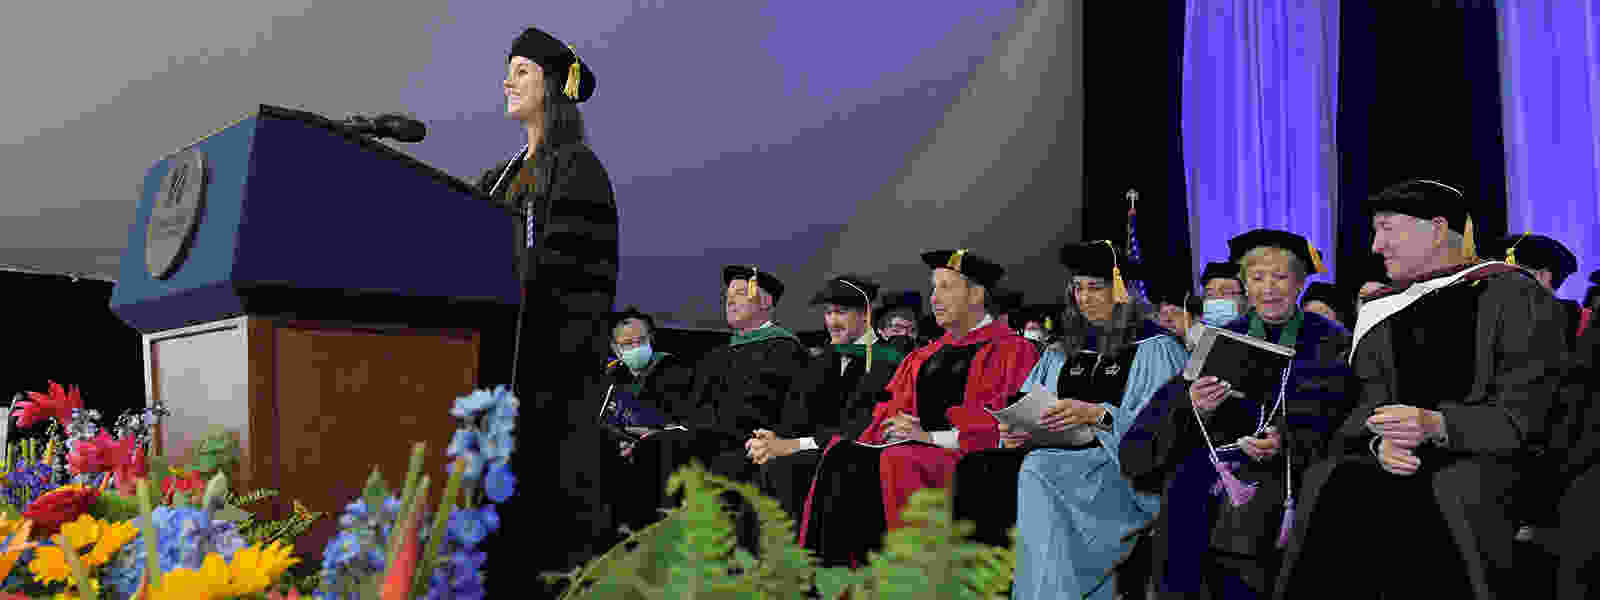 graduate-speech-ceremony.jpg